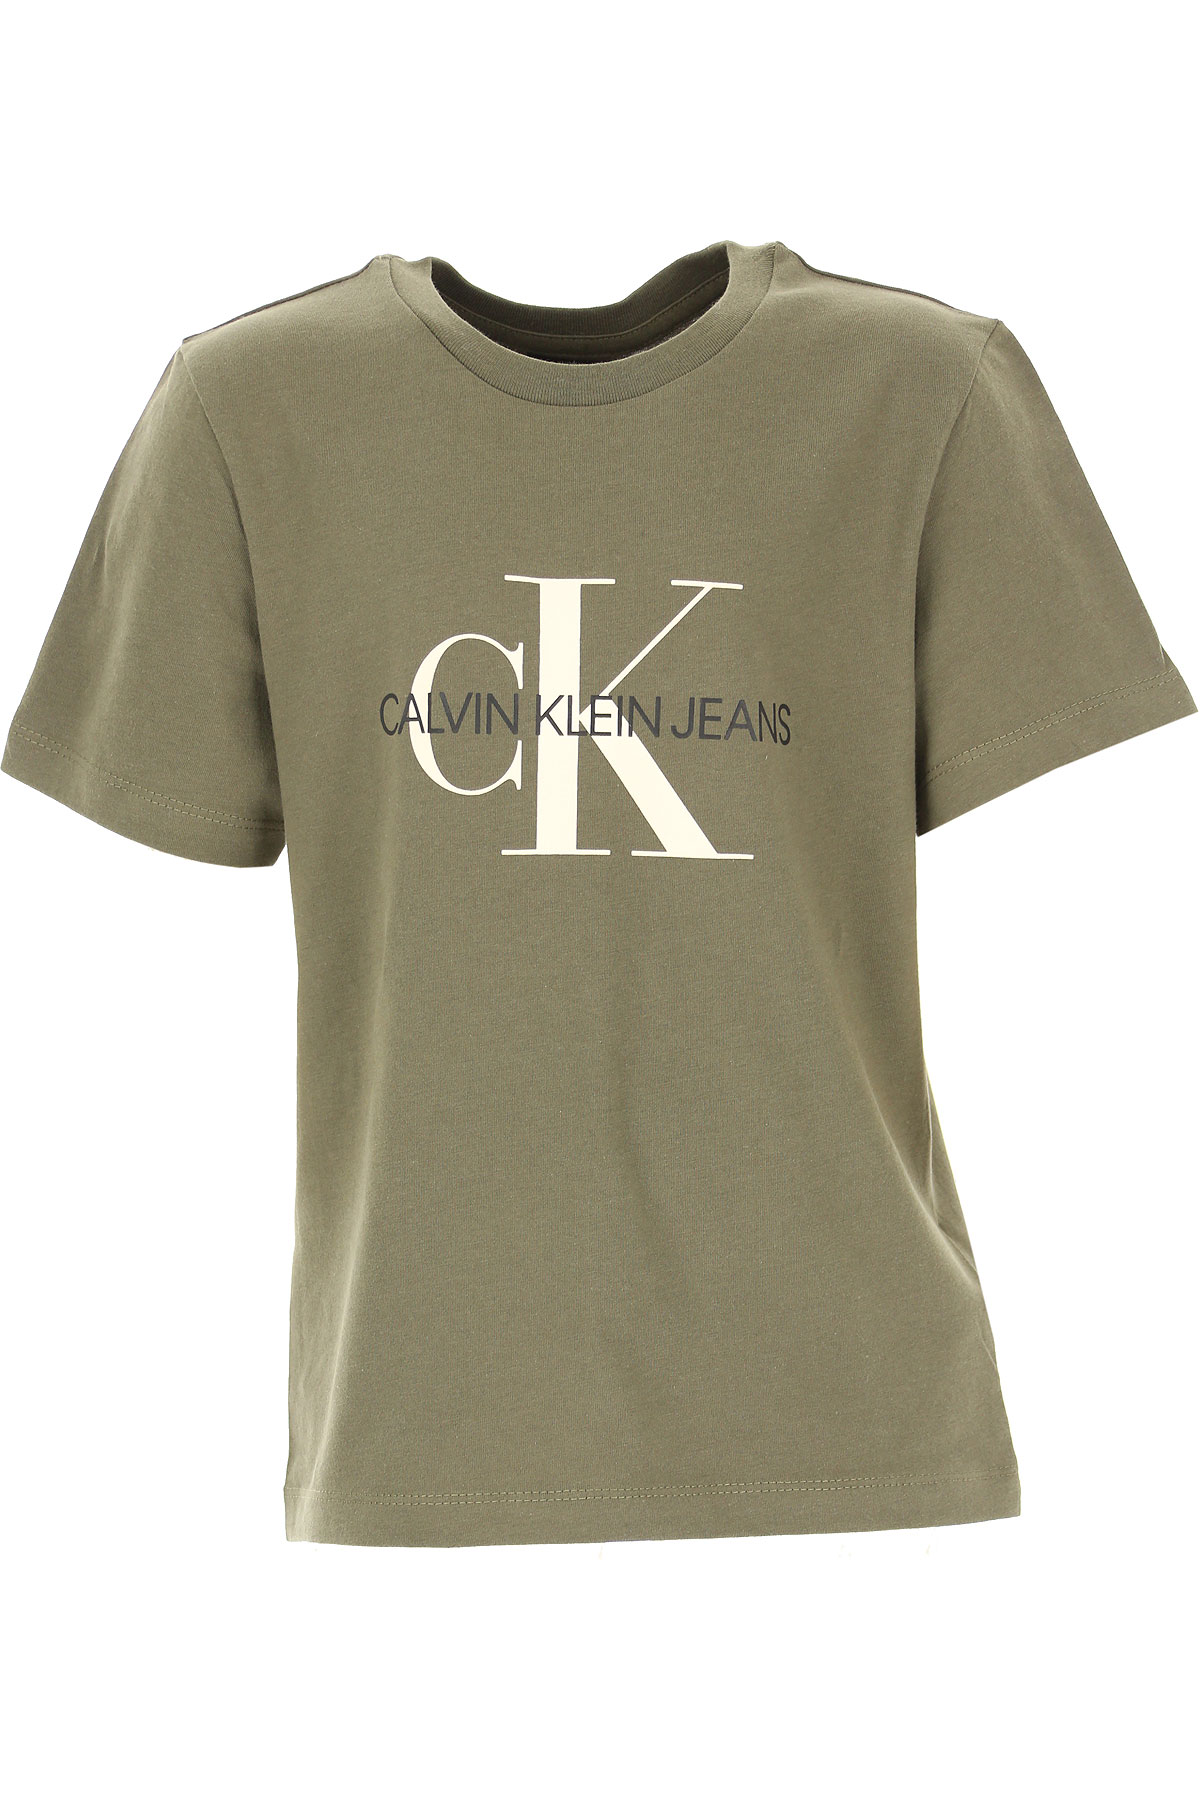 Calvin Klein Kinder T-Shirt für Jungen Günstig im Sale, Trauben Blatt, Baumwolle, 2017, 10Y 12Y 14Y 16Y 4Y 6Y 8Y